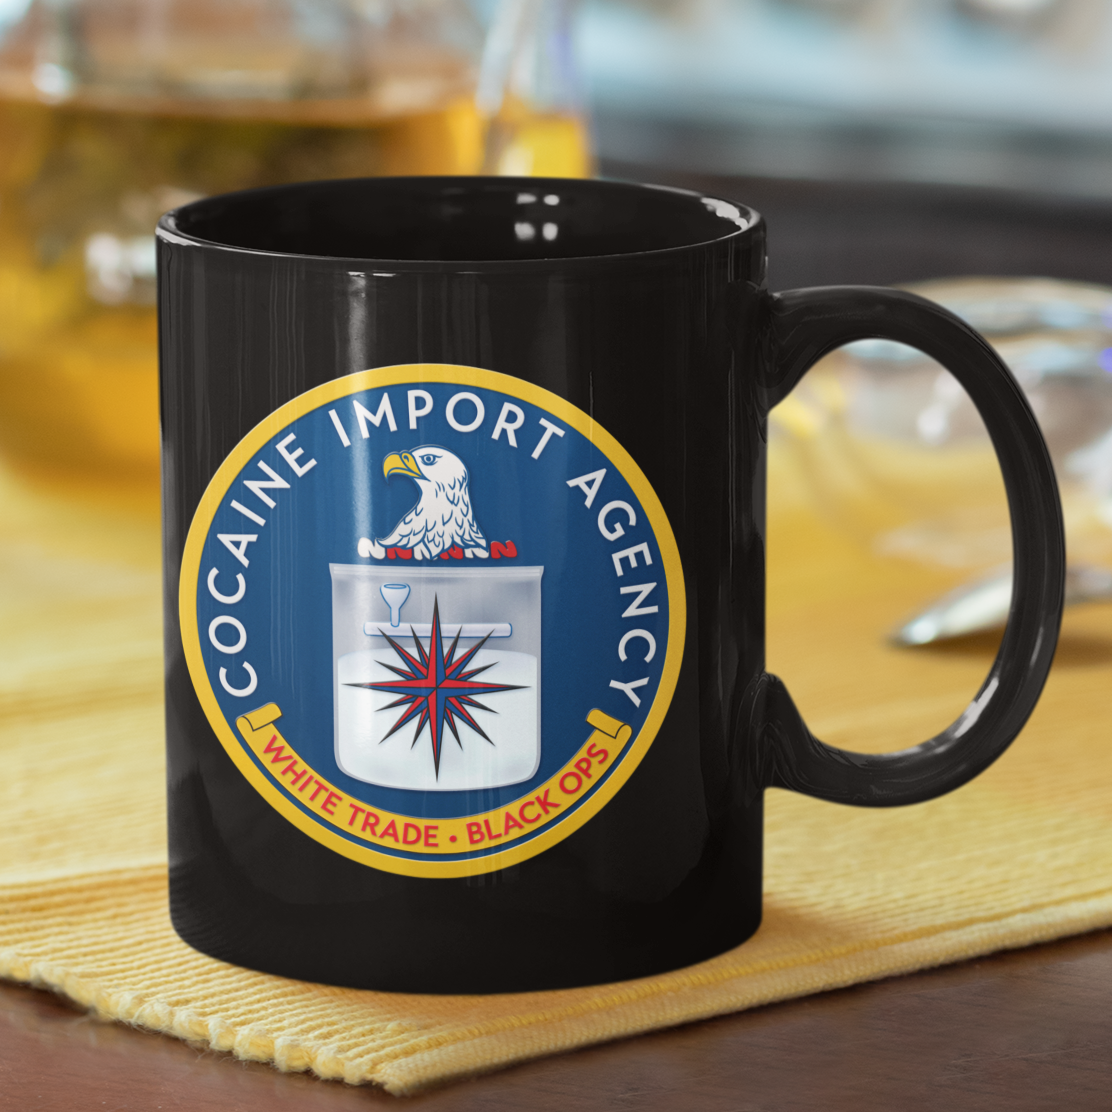 CIA Cocaine Import Agency Mug